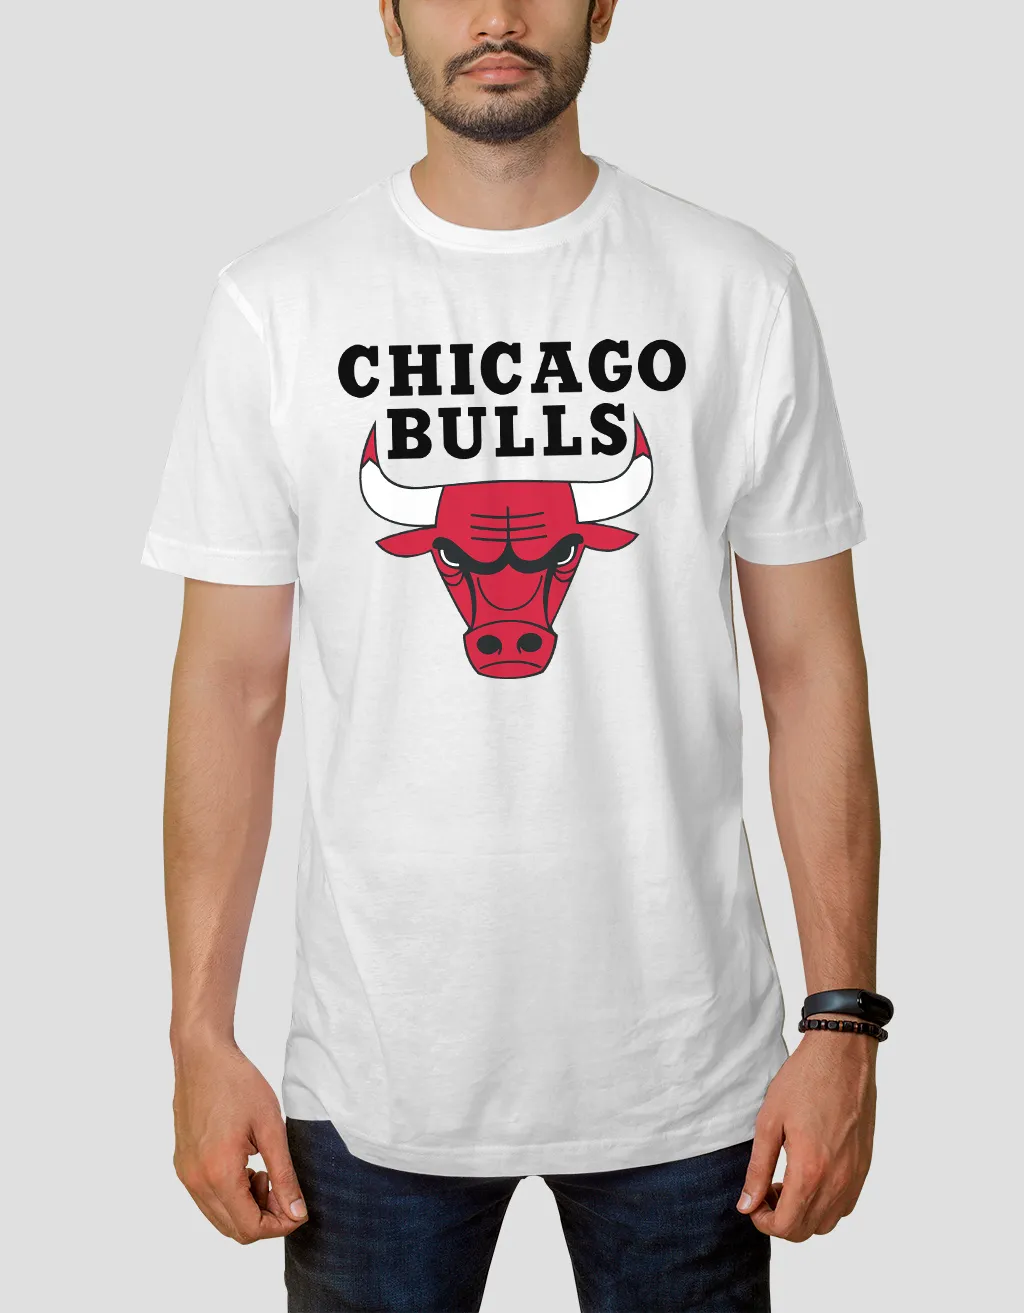 Buy Chicago Bulls Tee Online In India -  India